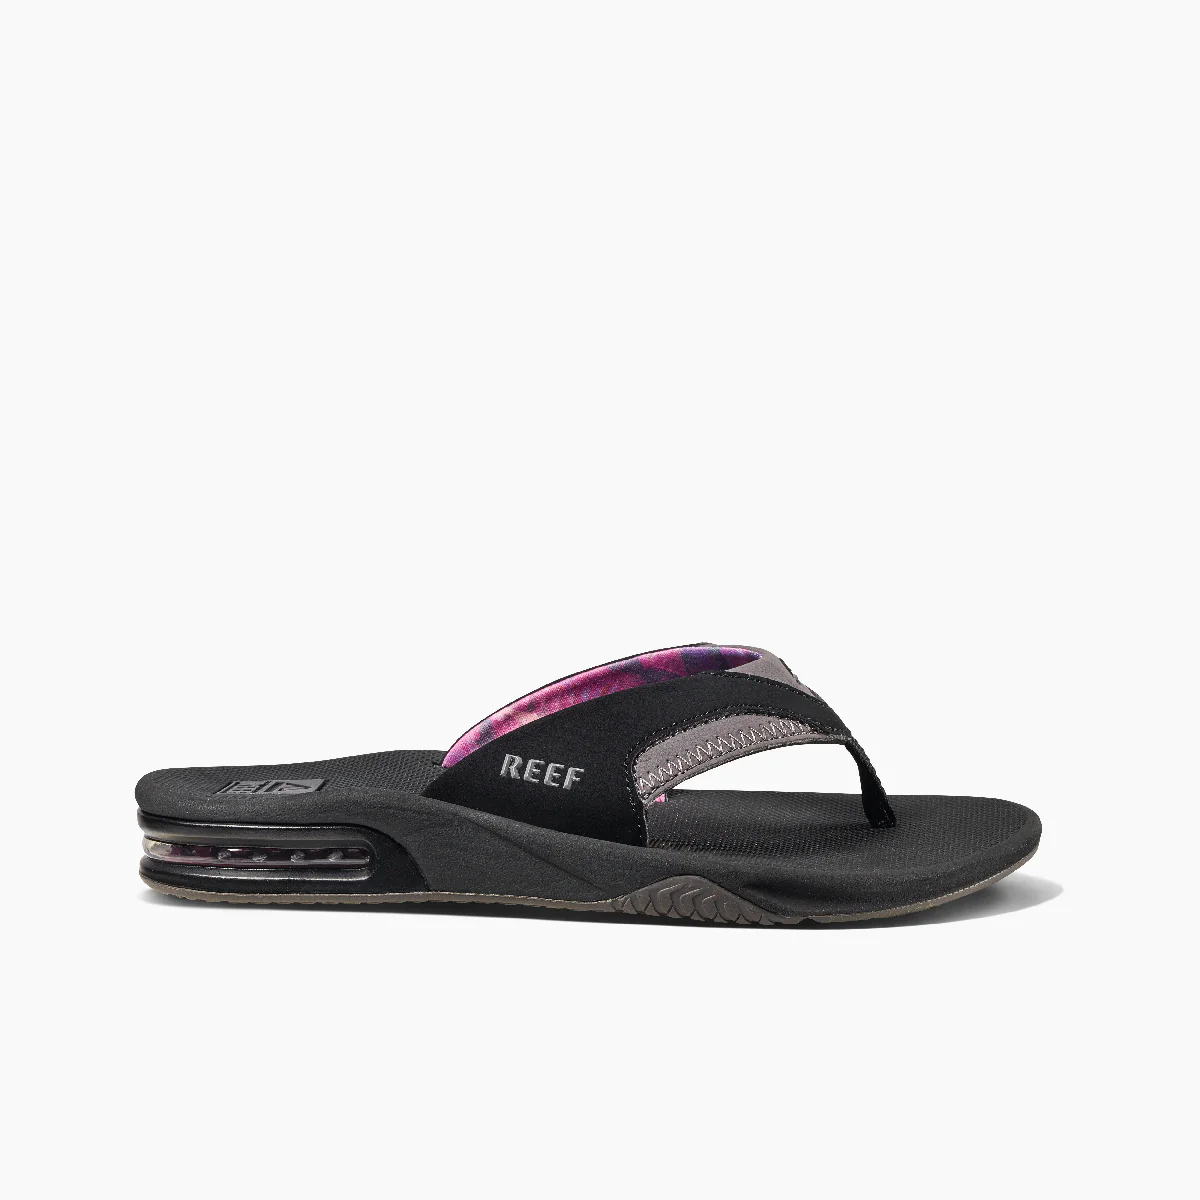 Womens Fanning flip flop sandals in black grey side view